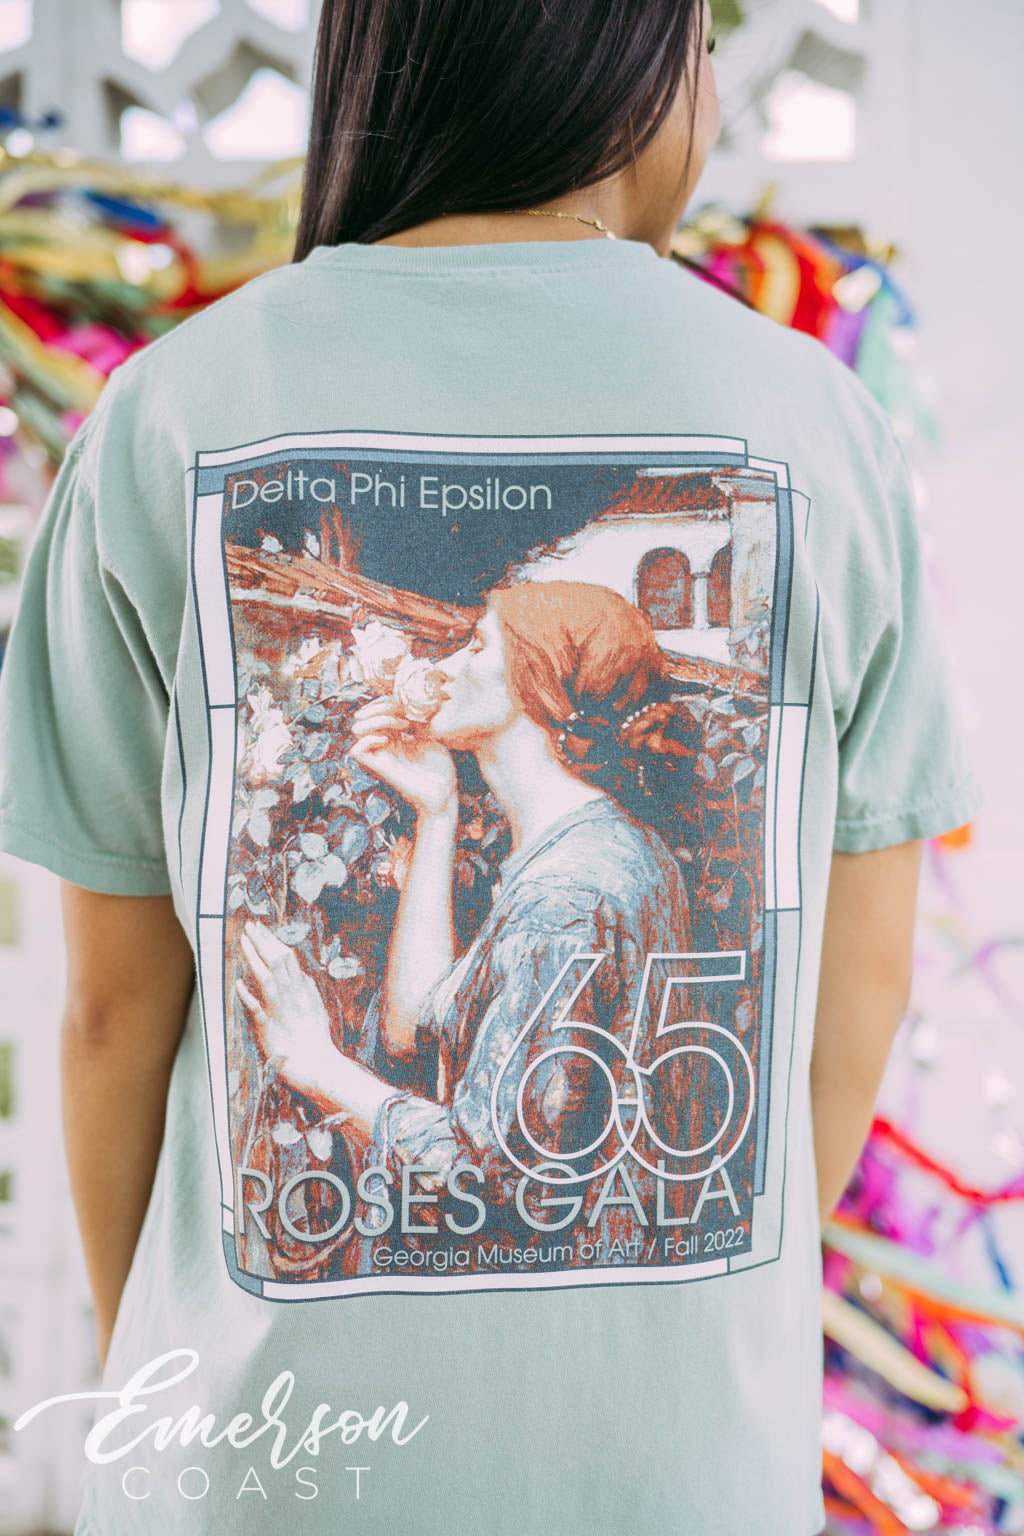 Delta Phi Epsilon 65 Roses Gala Tshirt